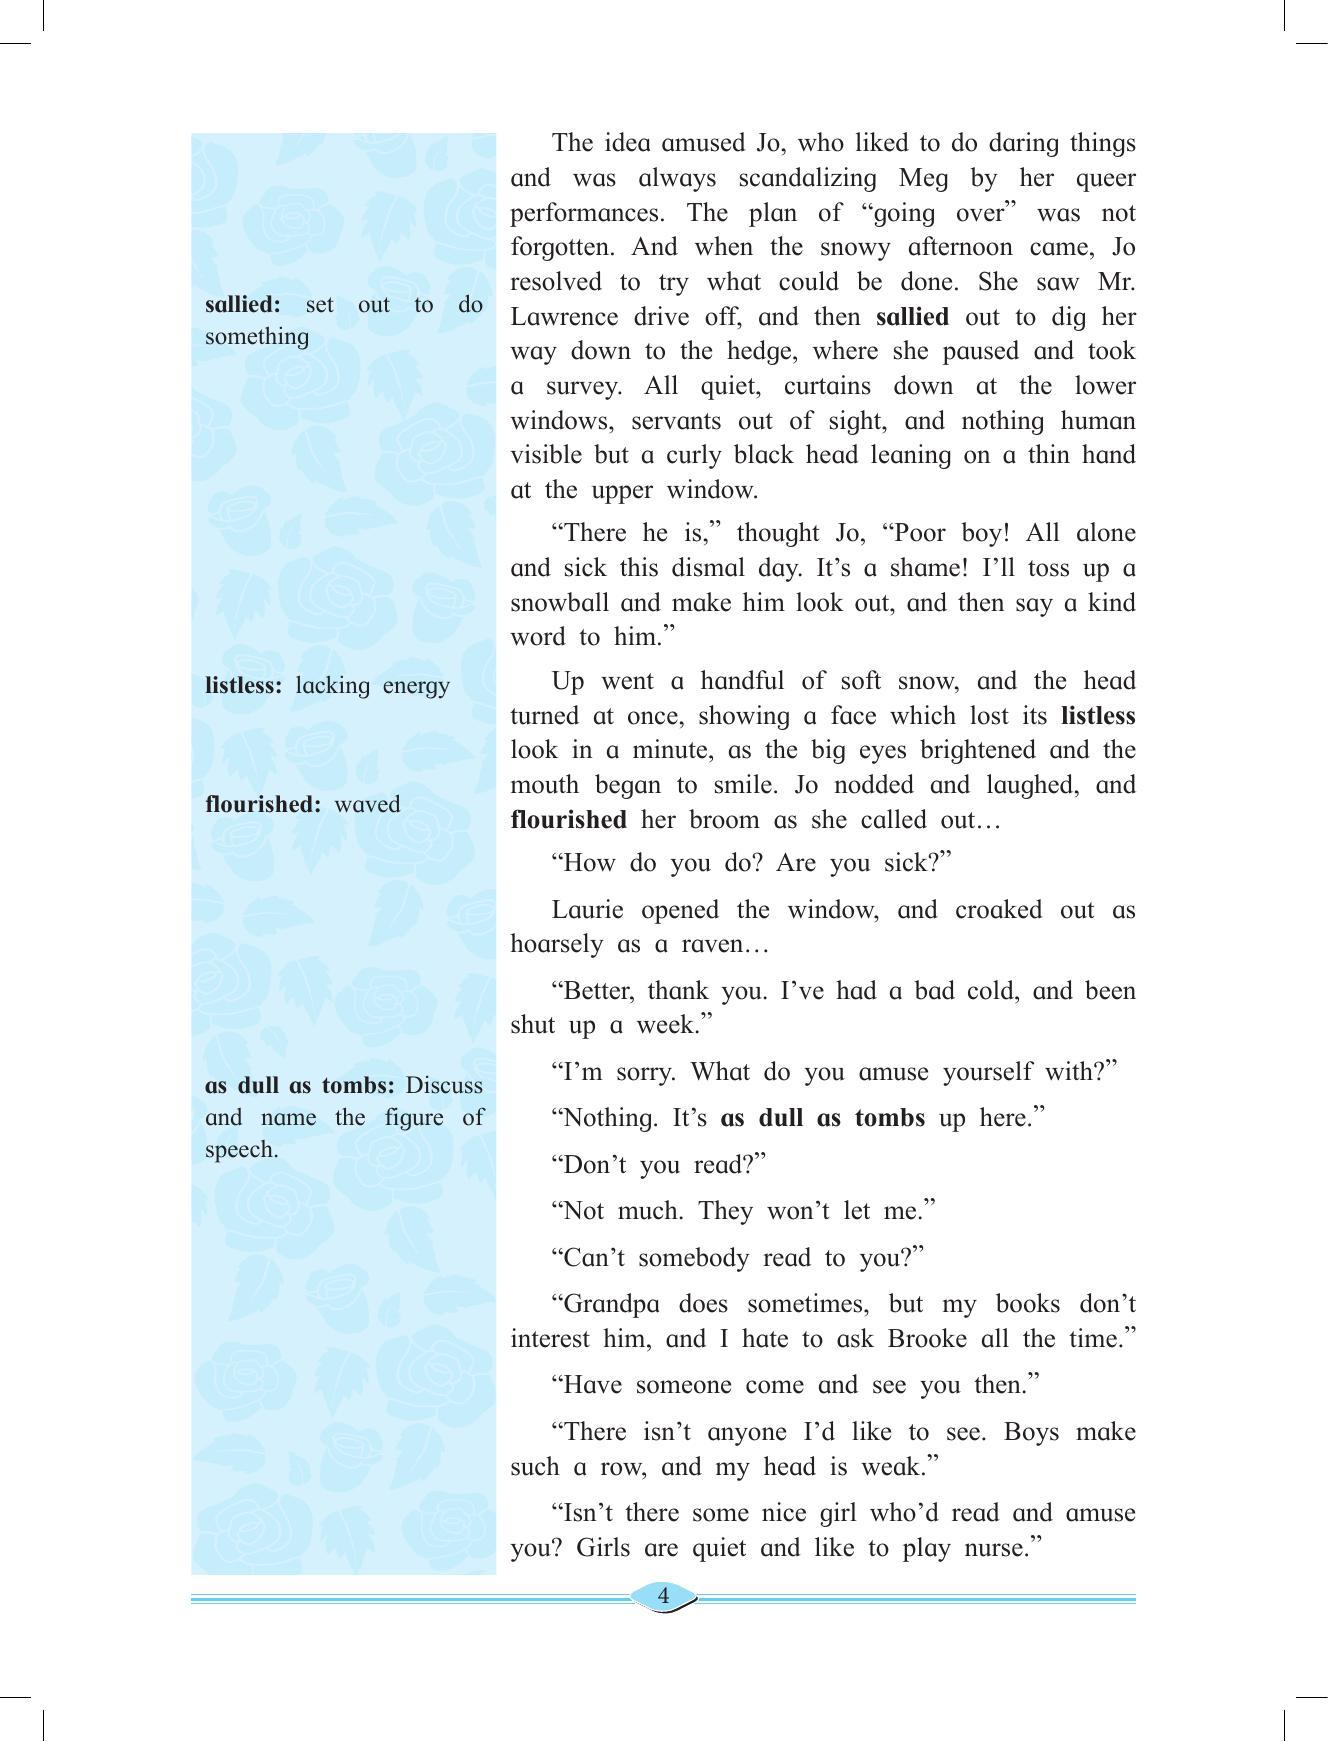 Maharashtra Board Class 11 English Textbook - Page 18